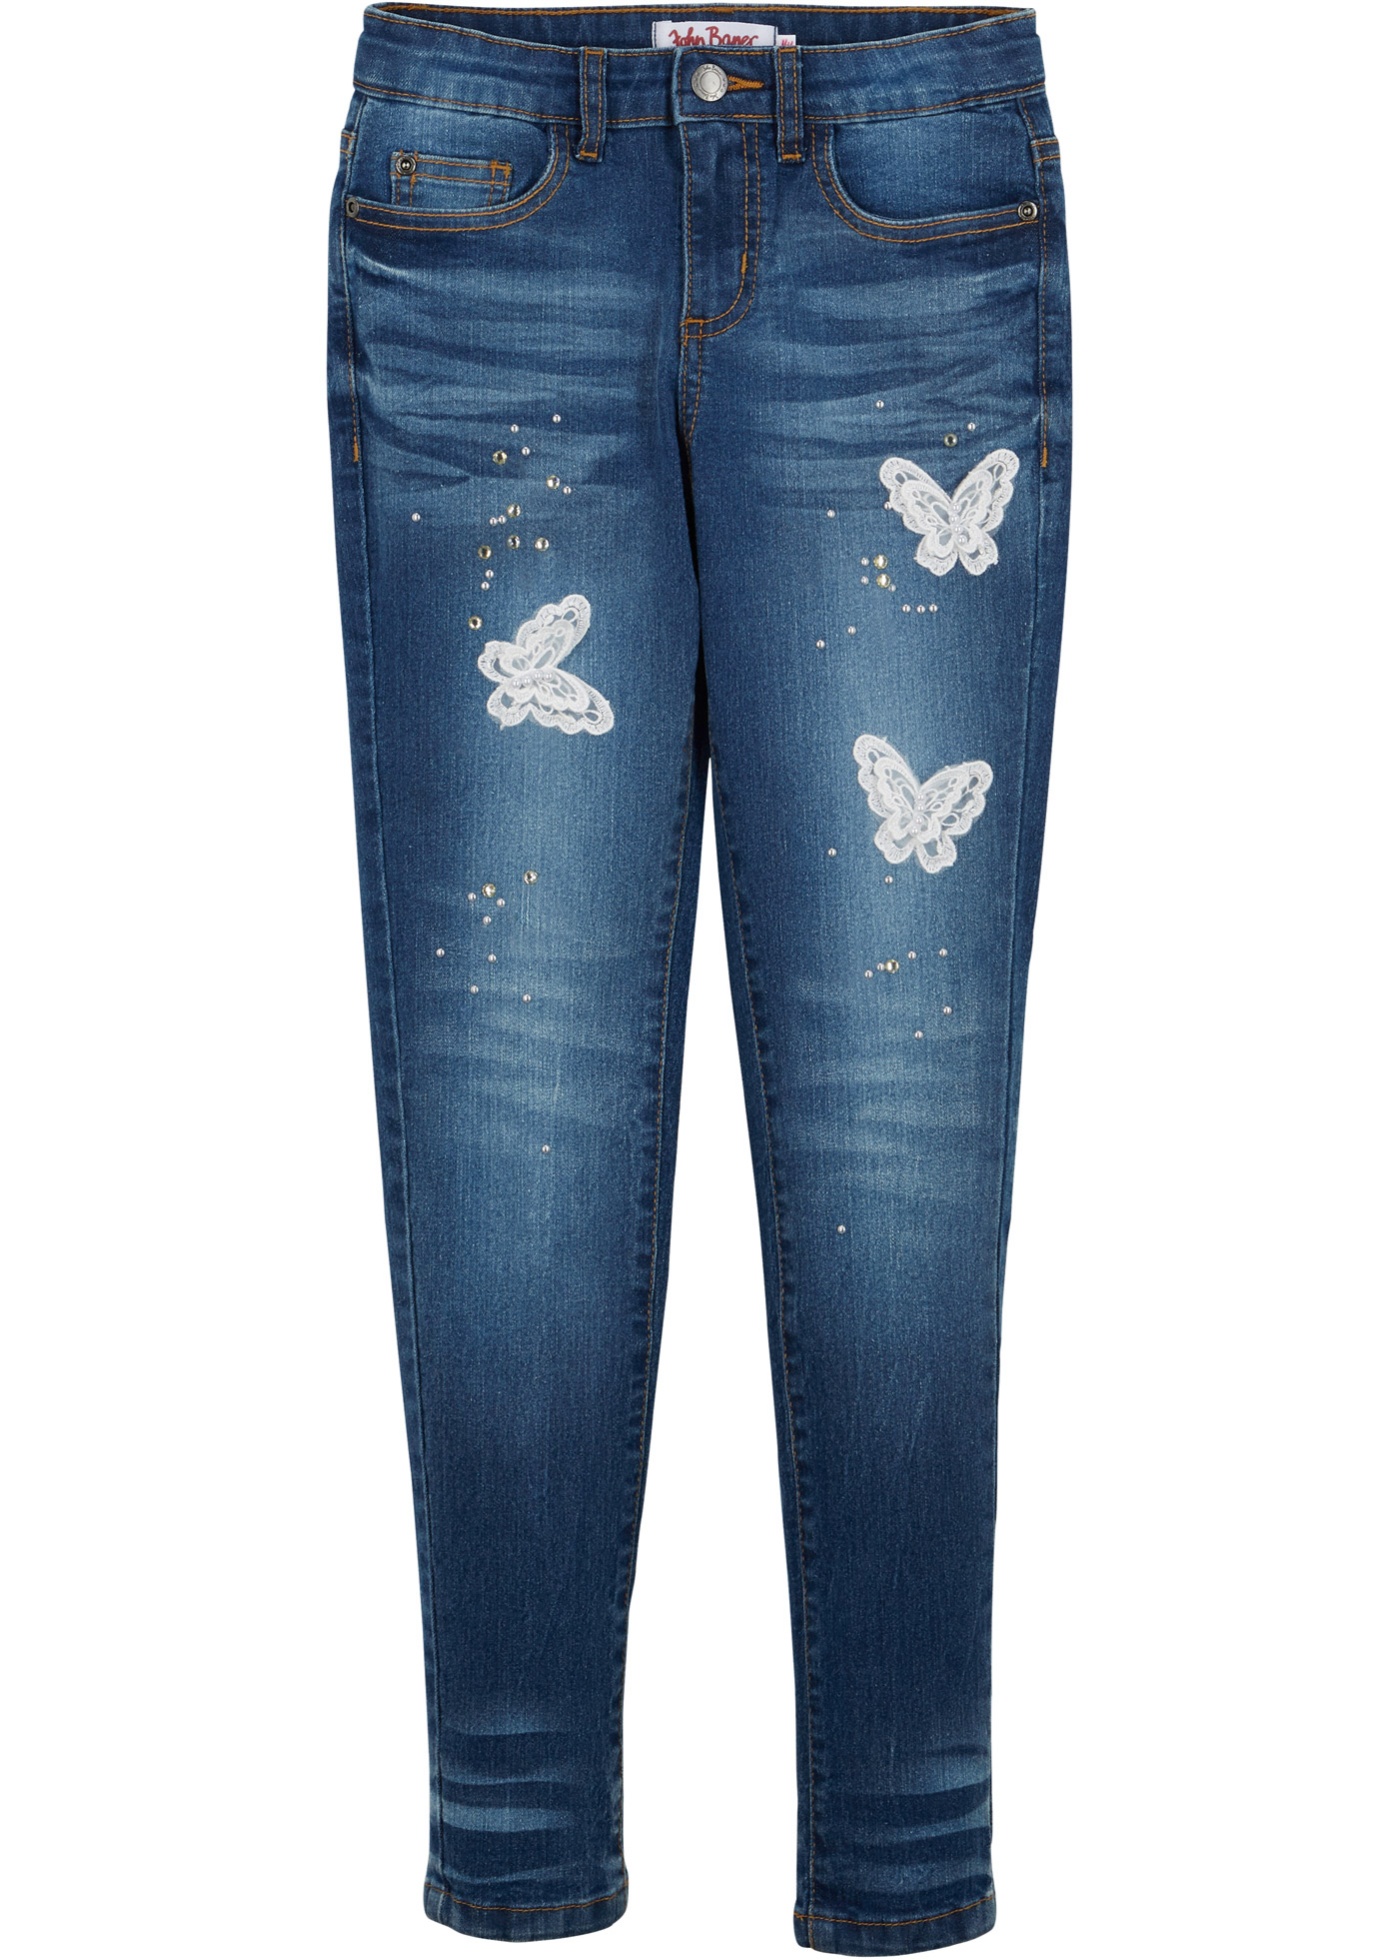 Mädchen Jeans mit Schmetterlings-Applikation